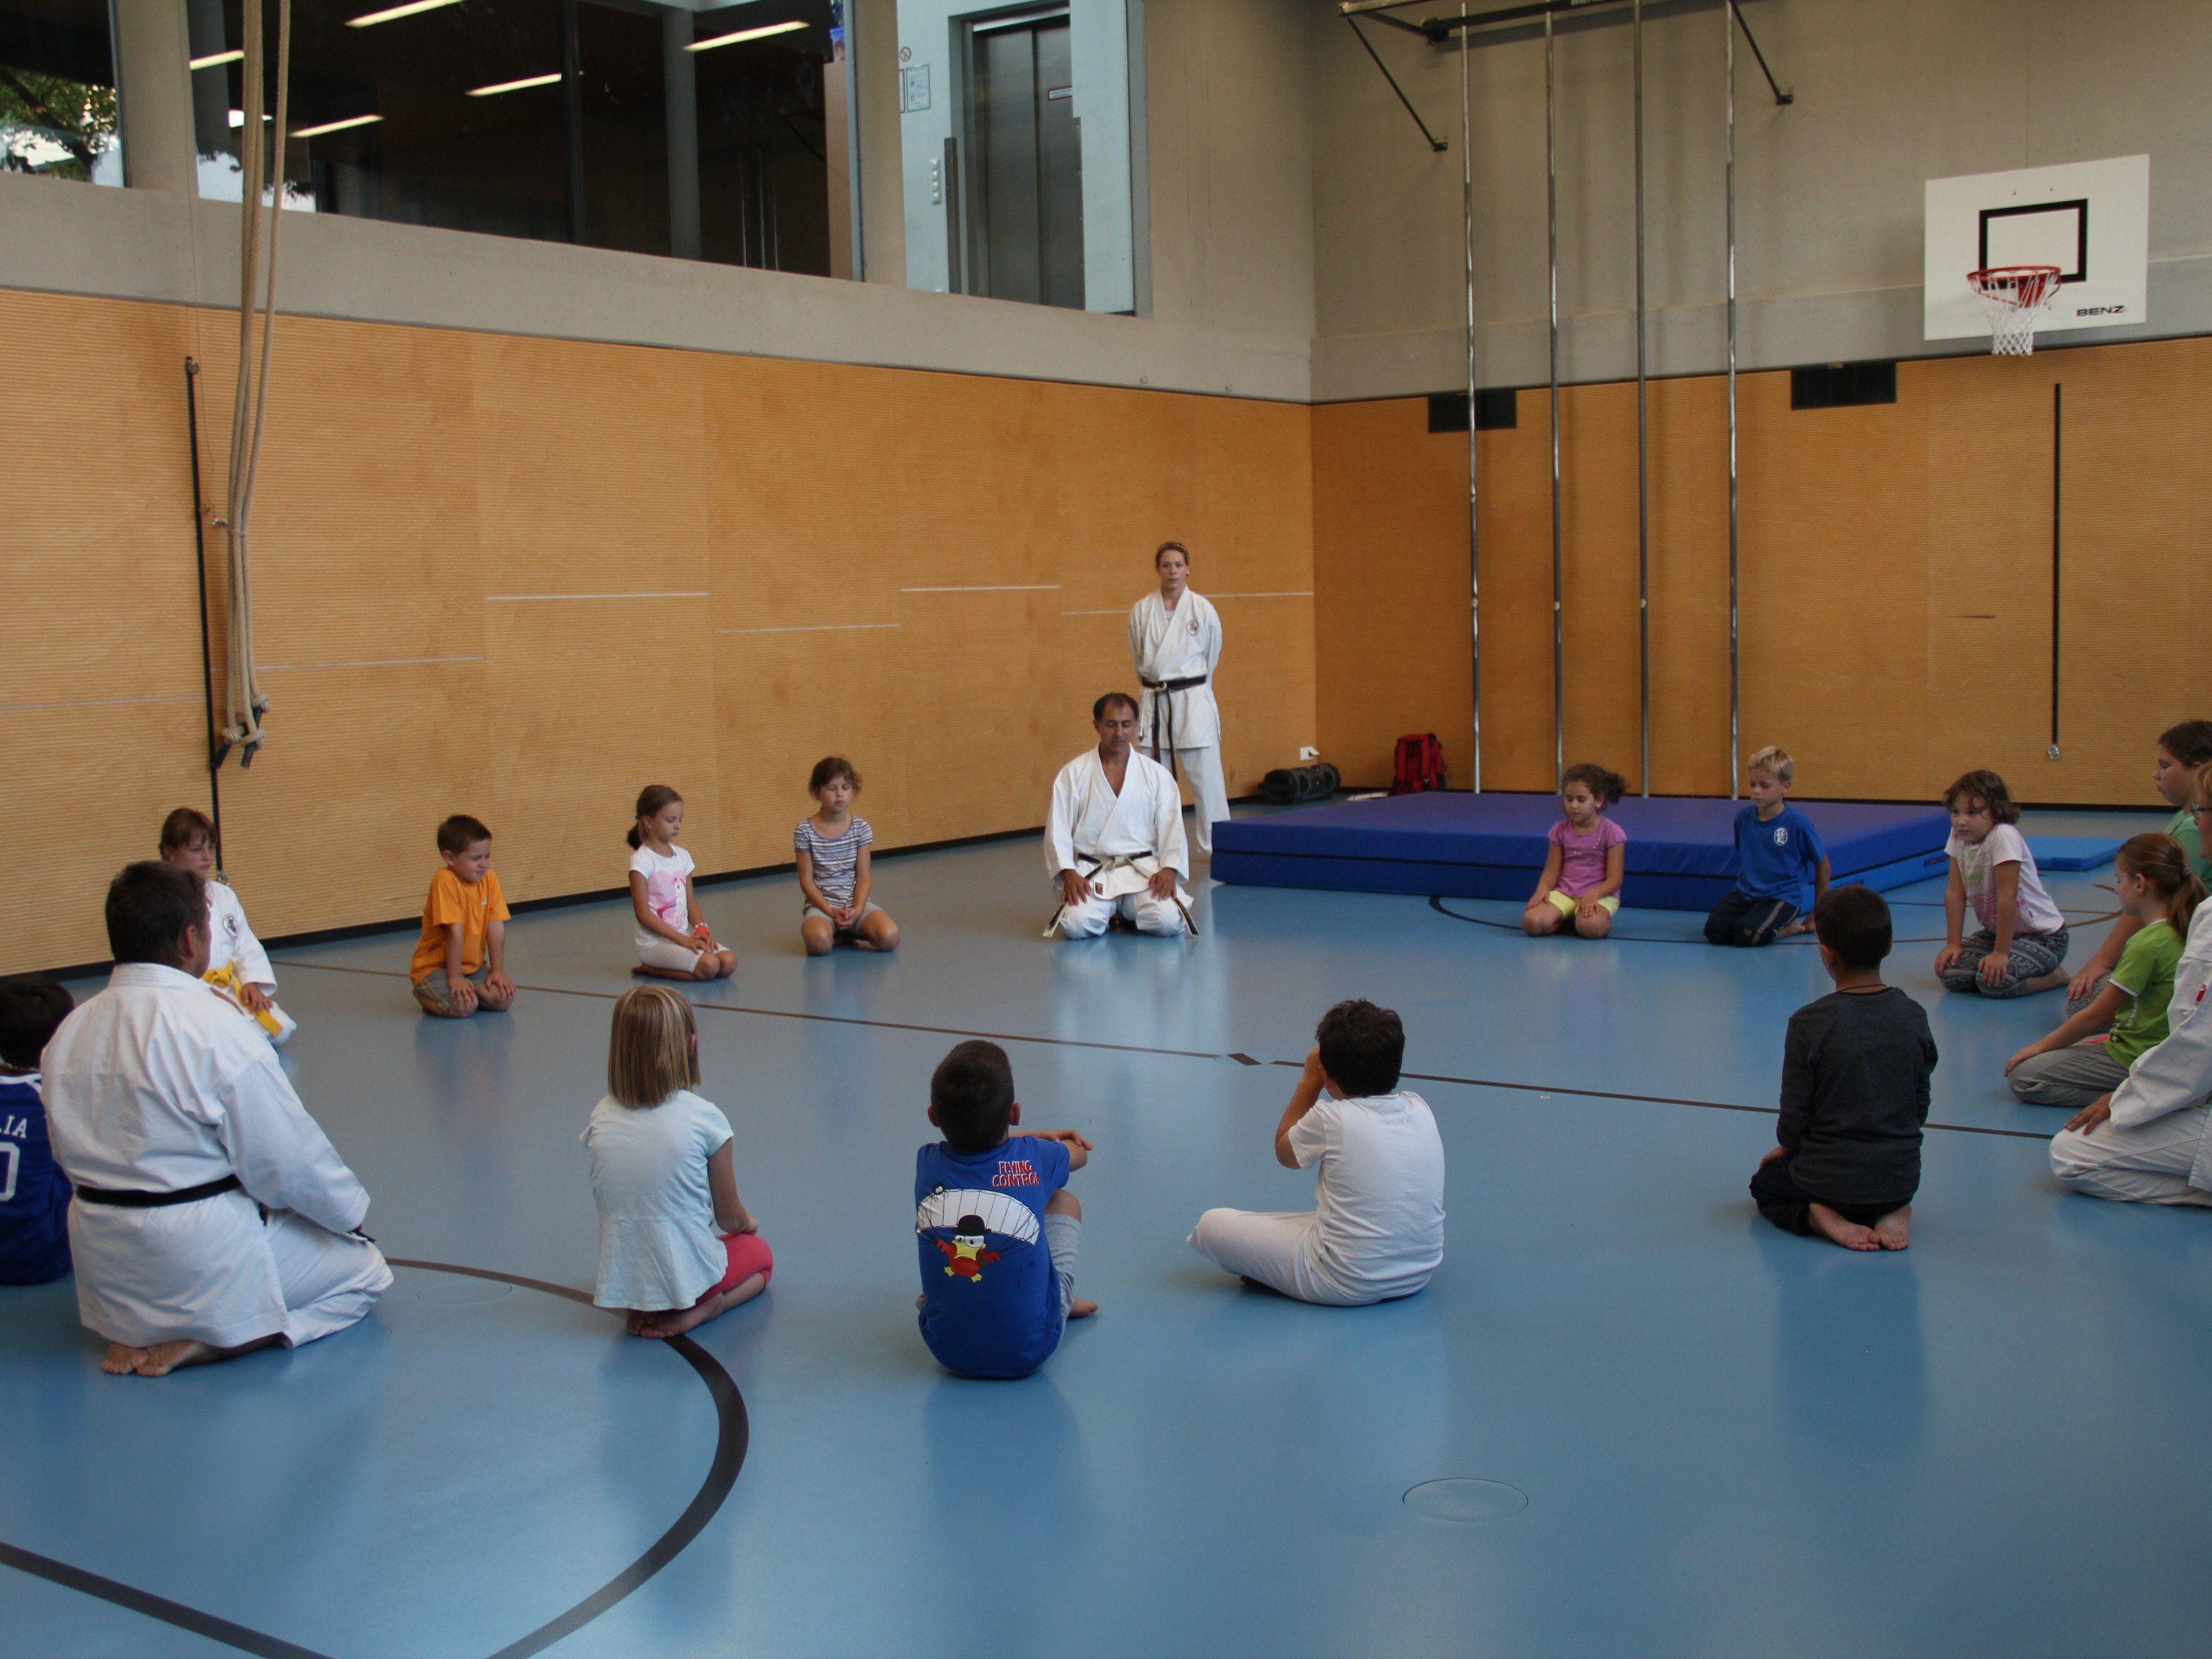 Shotokan Karate Club Lustenau startet neue Kurse - Lustenau | VOL.AT